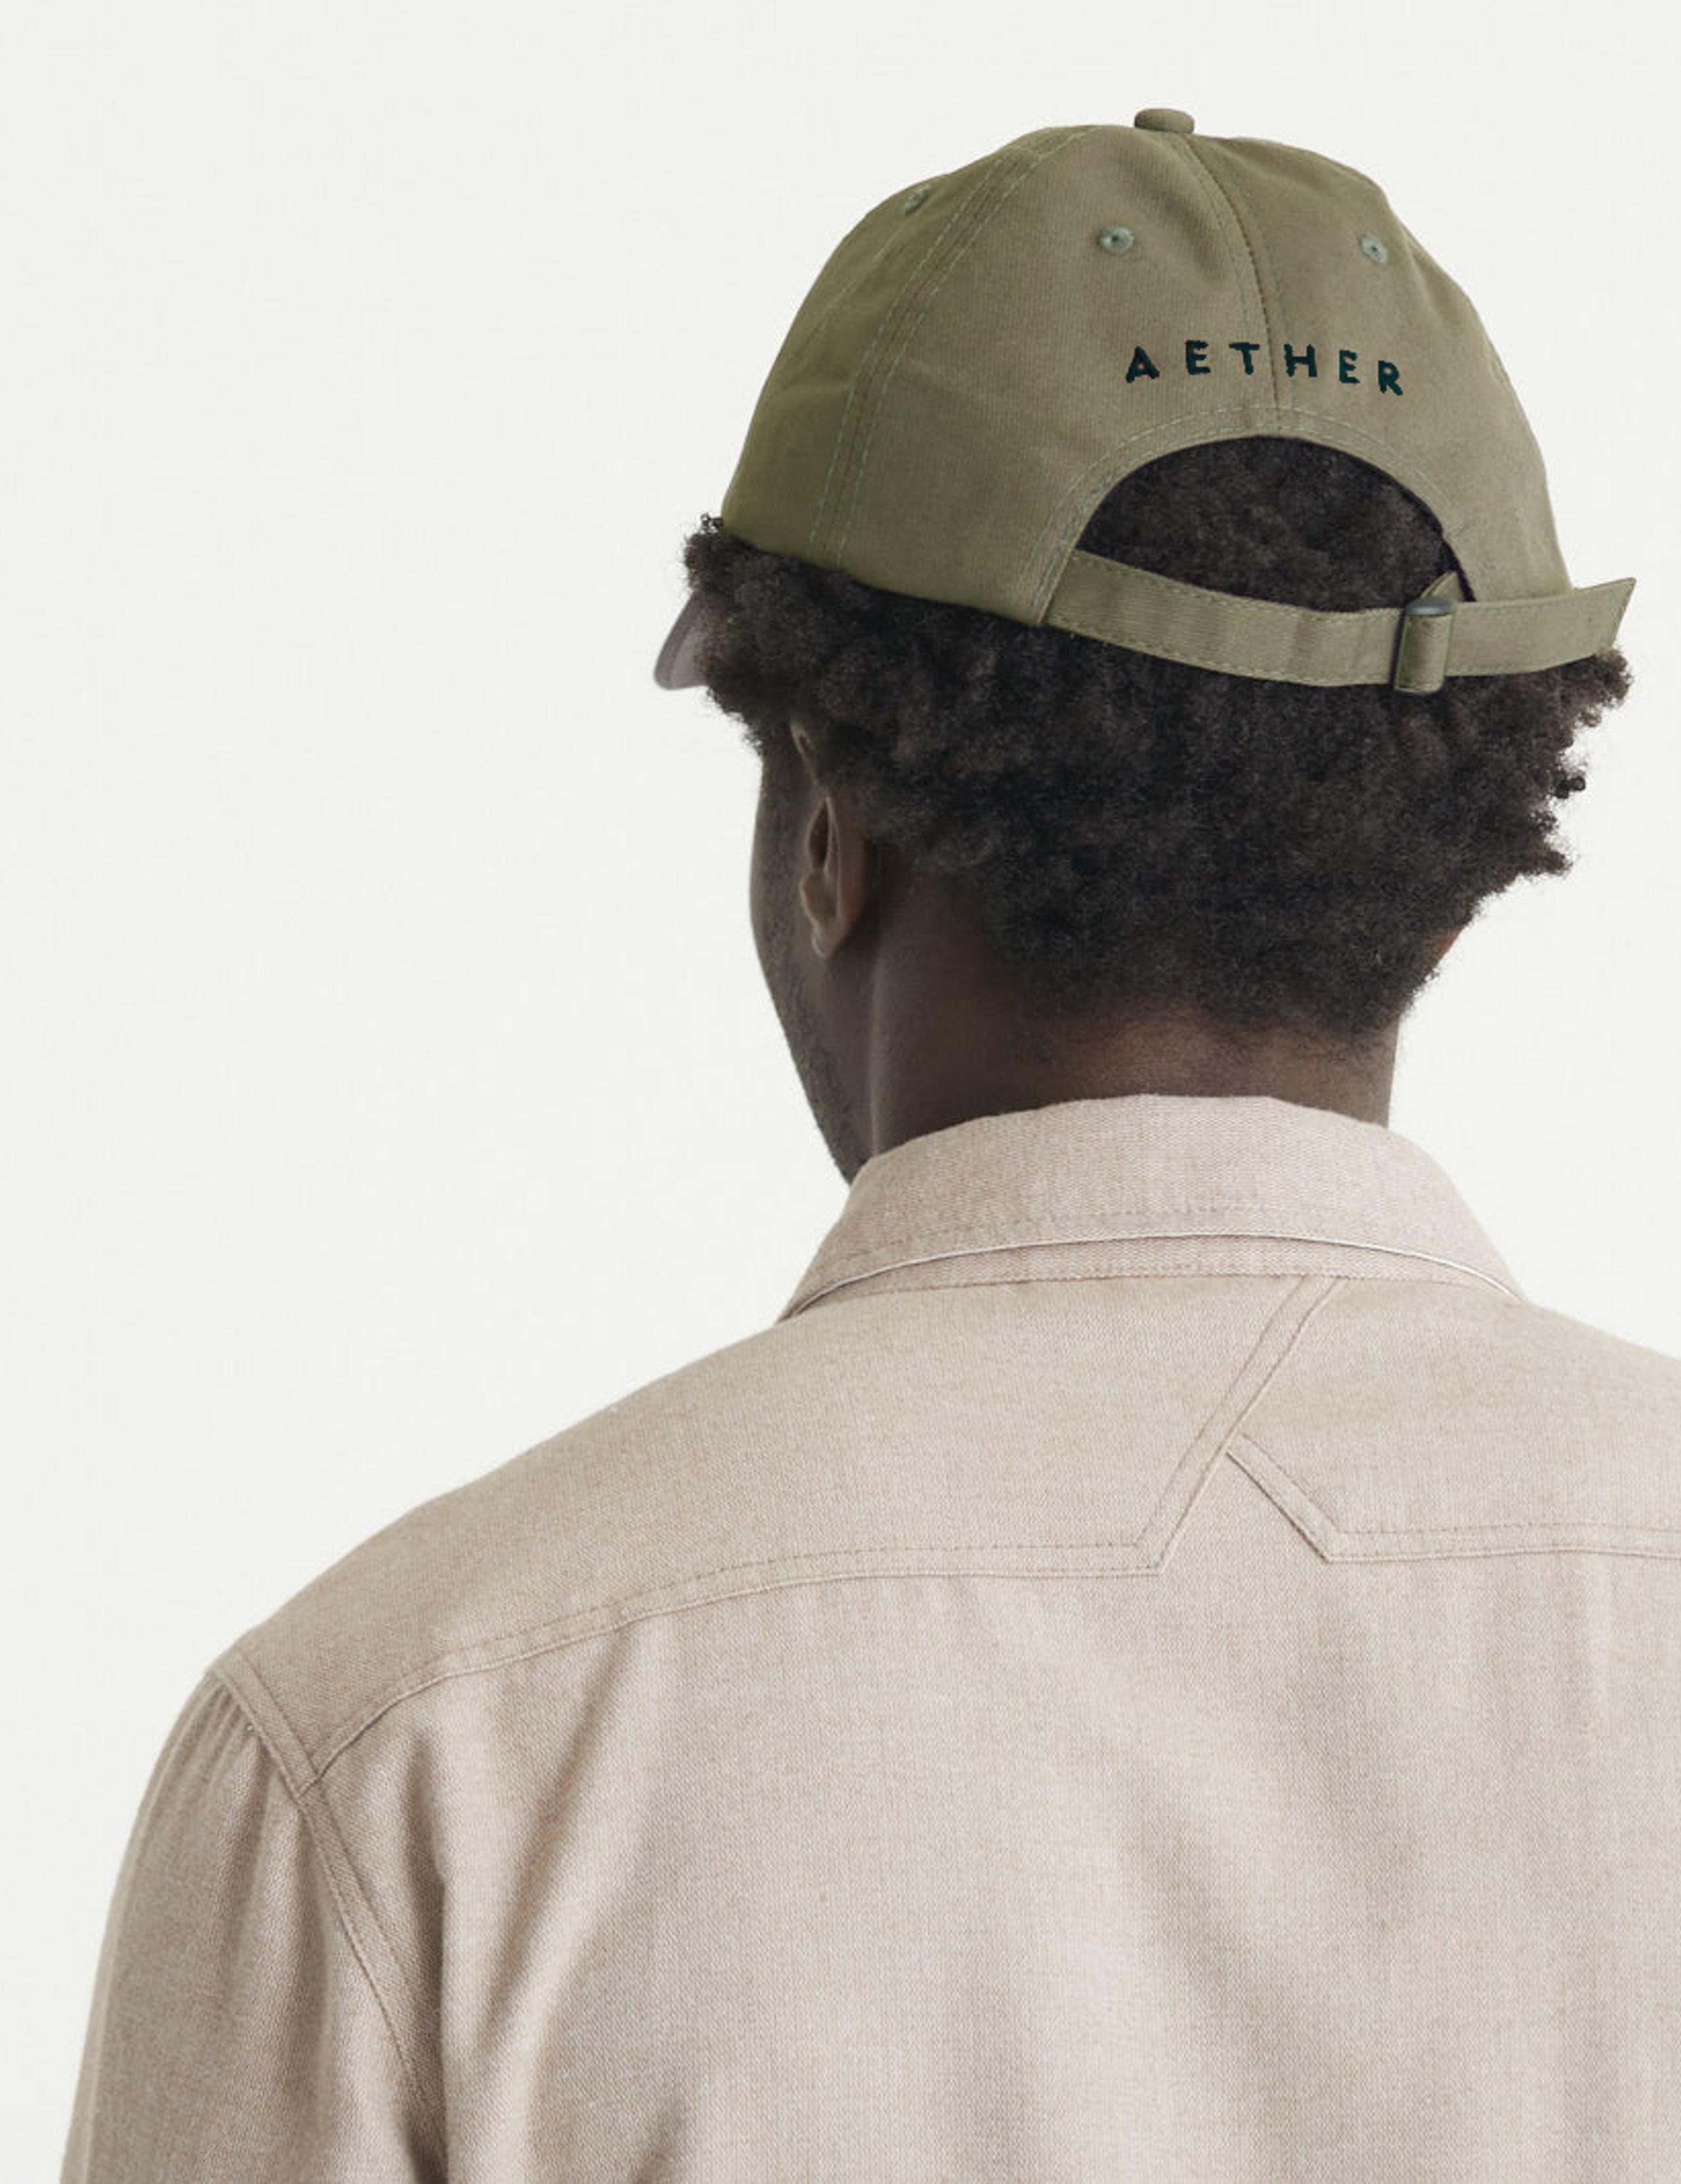 Man holding brim of Cotton Ripstop Hat in studio